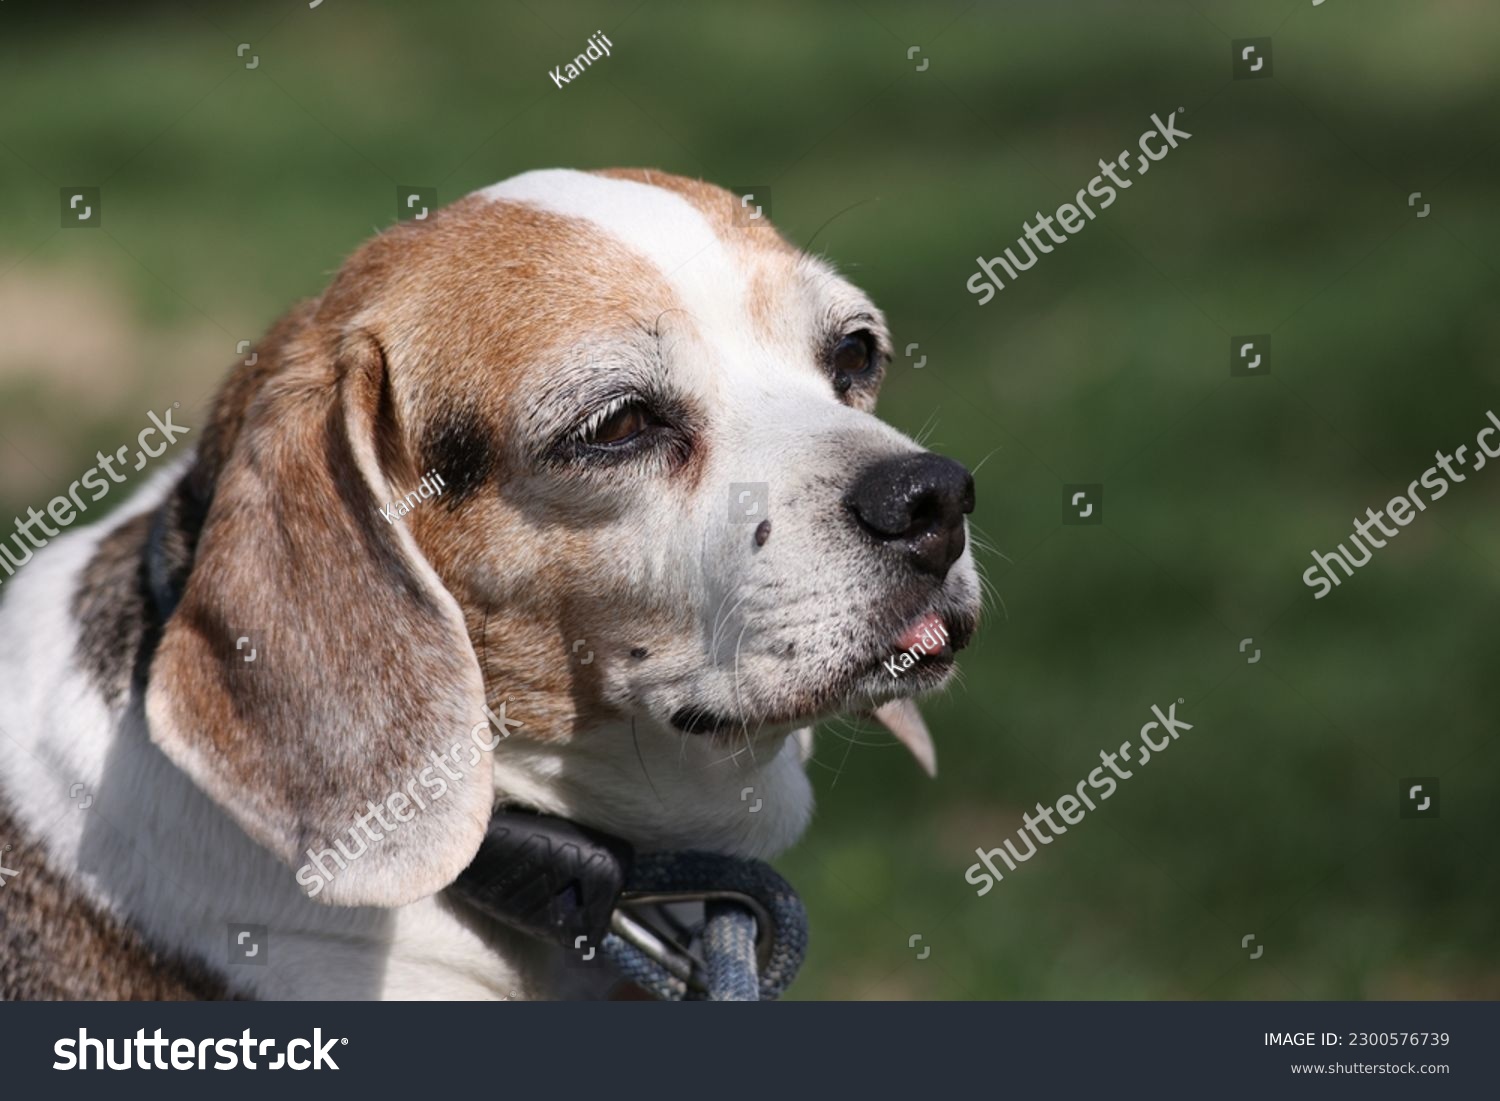 Elderly Beagle joyfully living its life